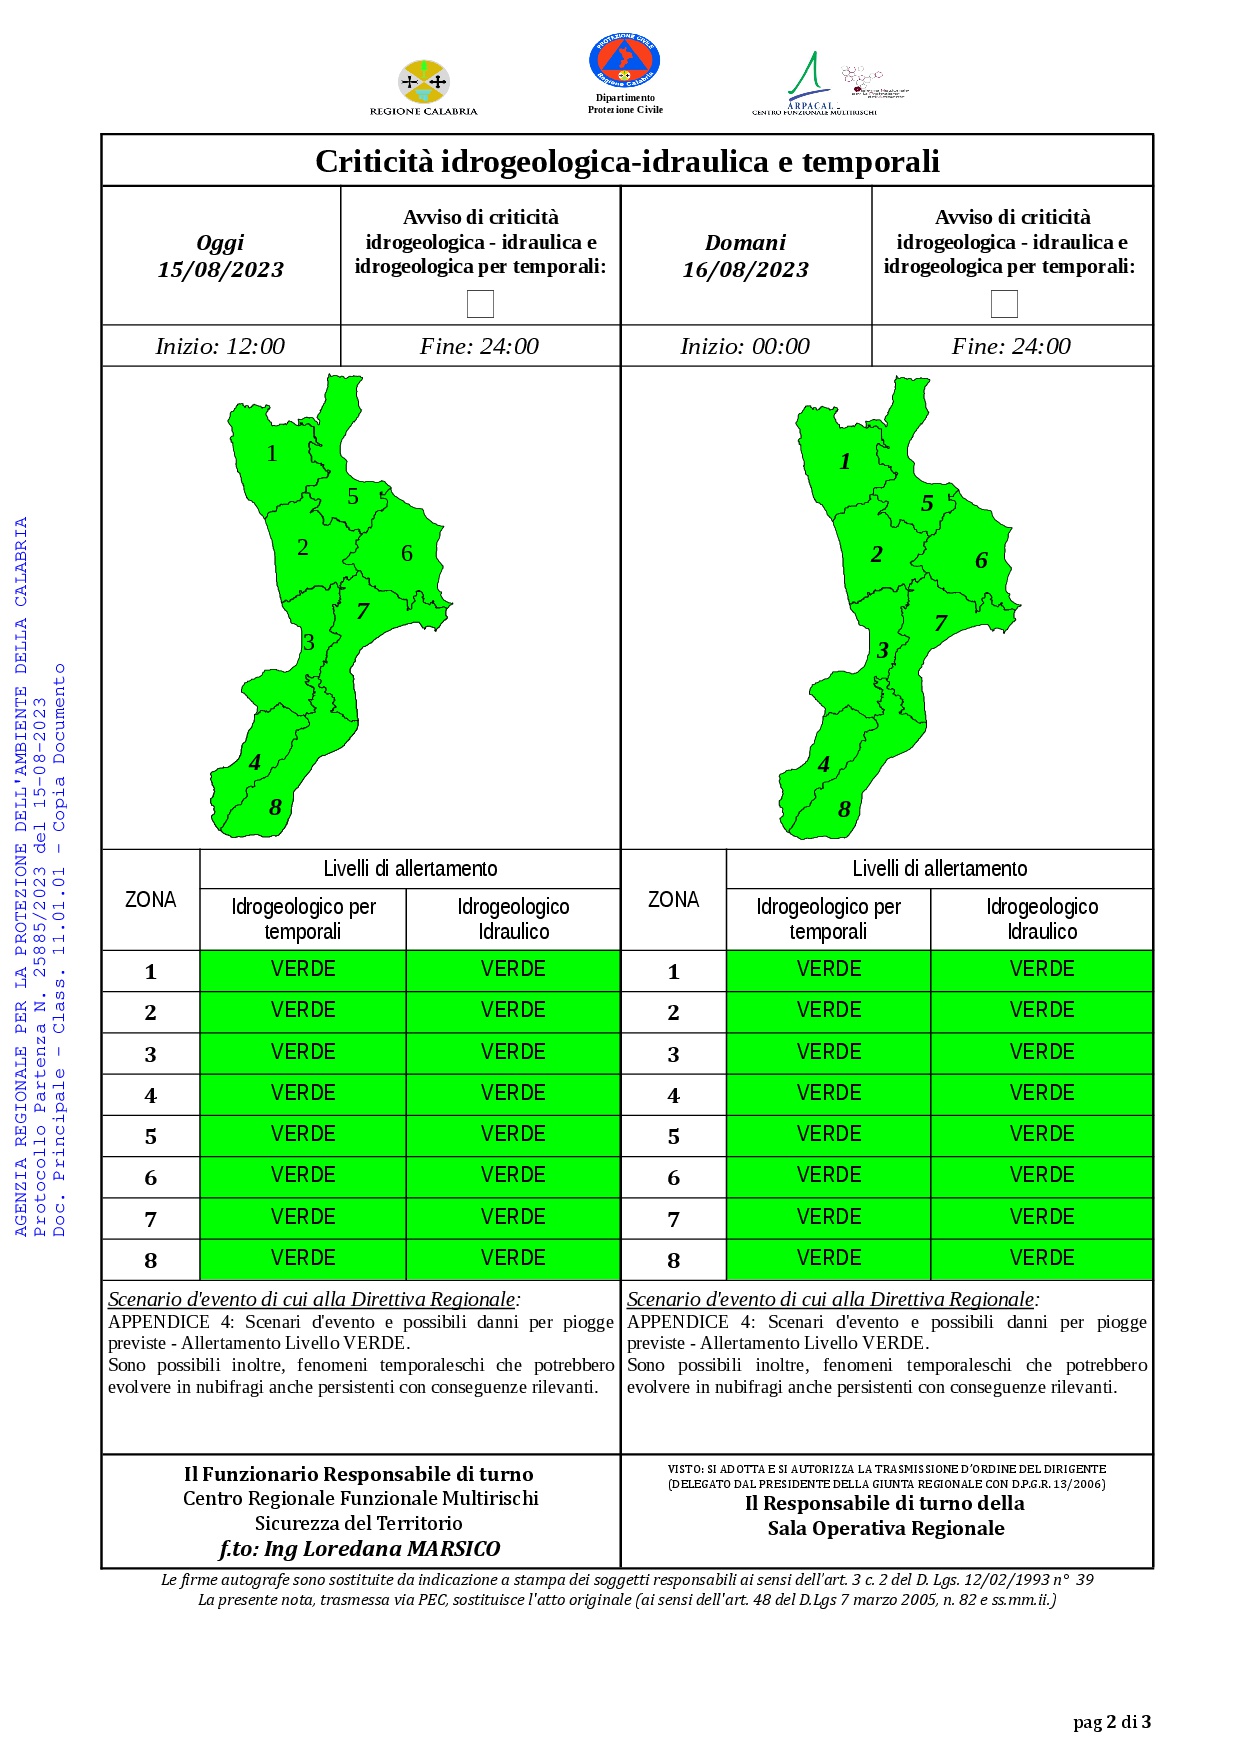 Criticità idrogeologica-idraulica e temporali in Calabria 15-08-2023